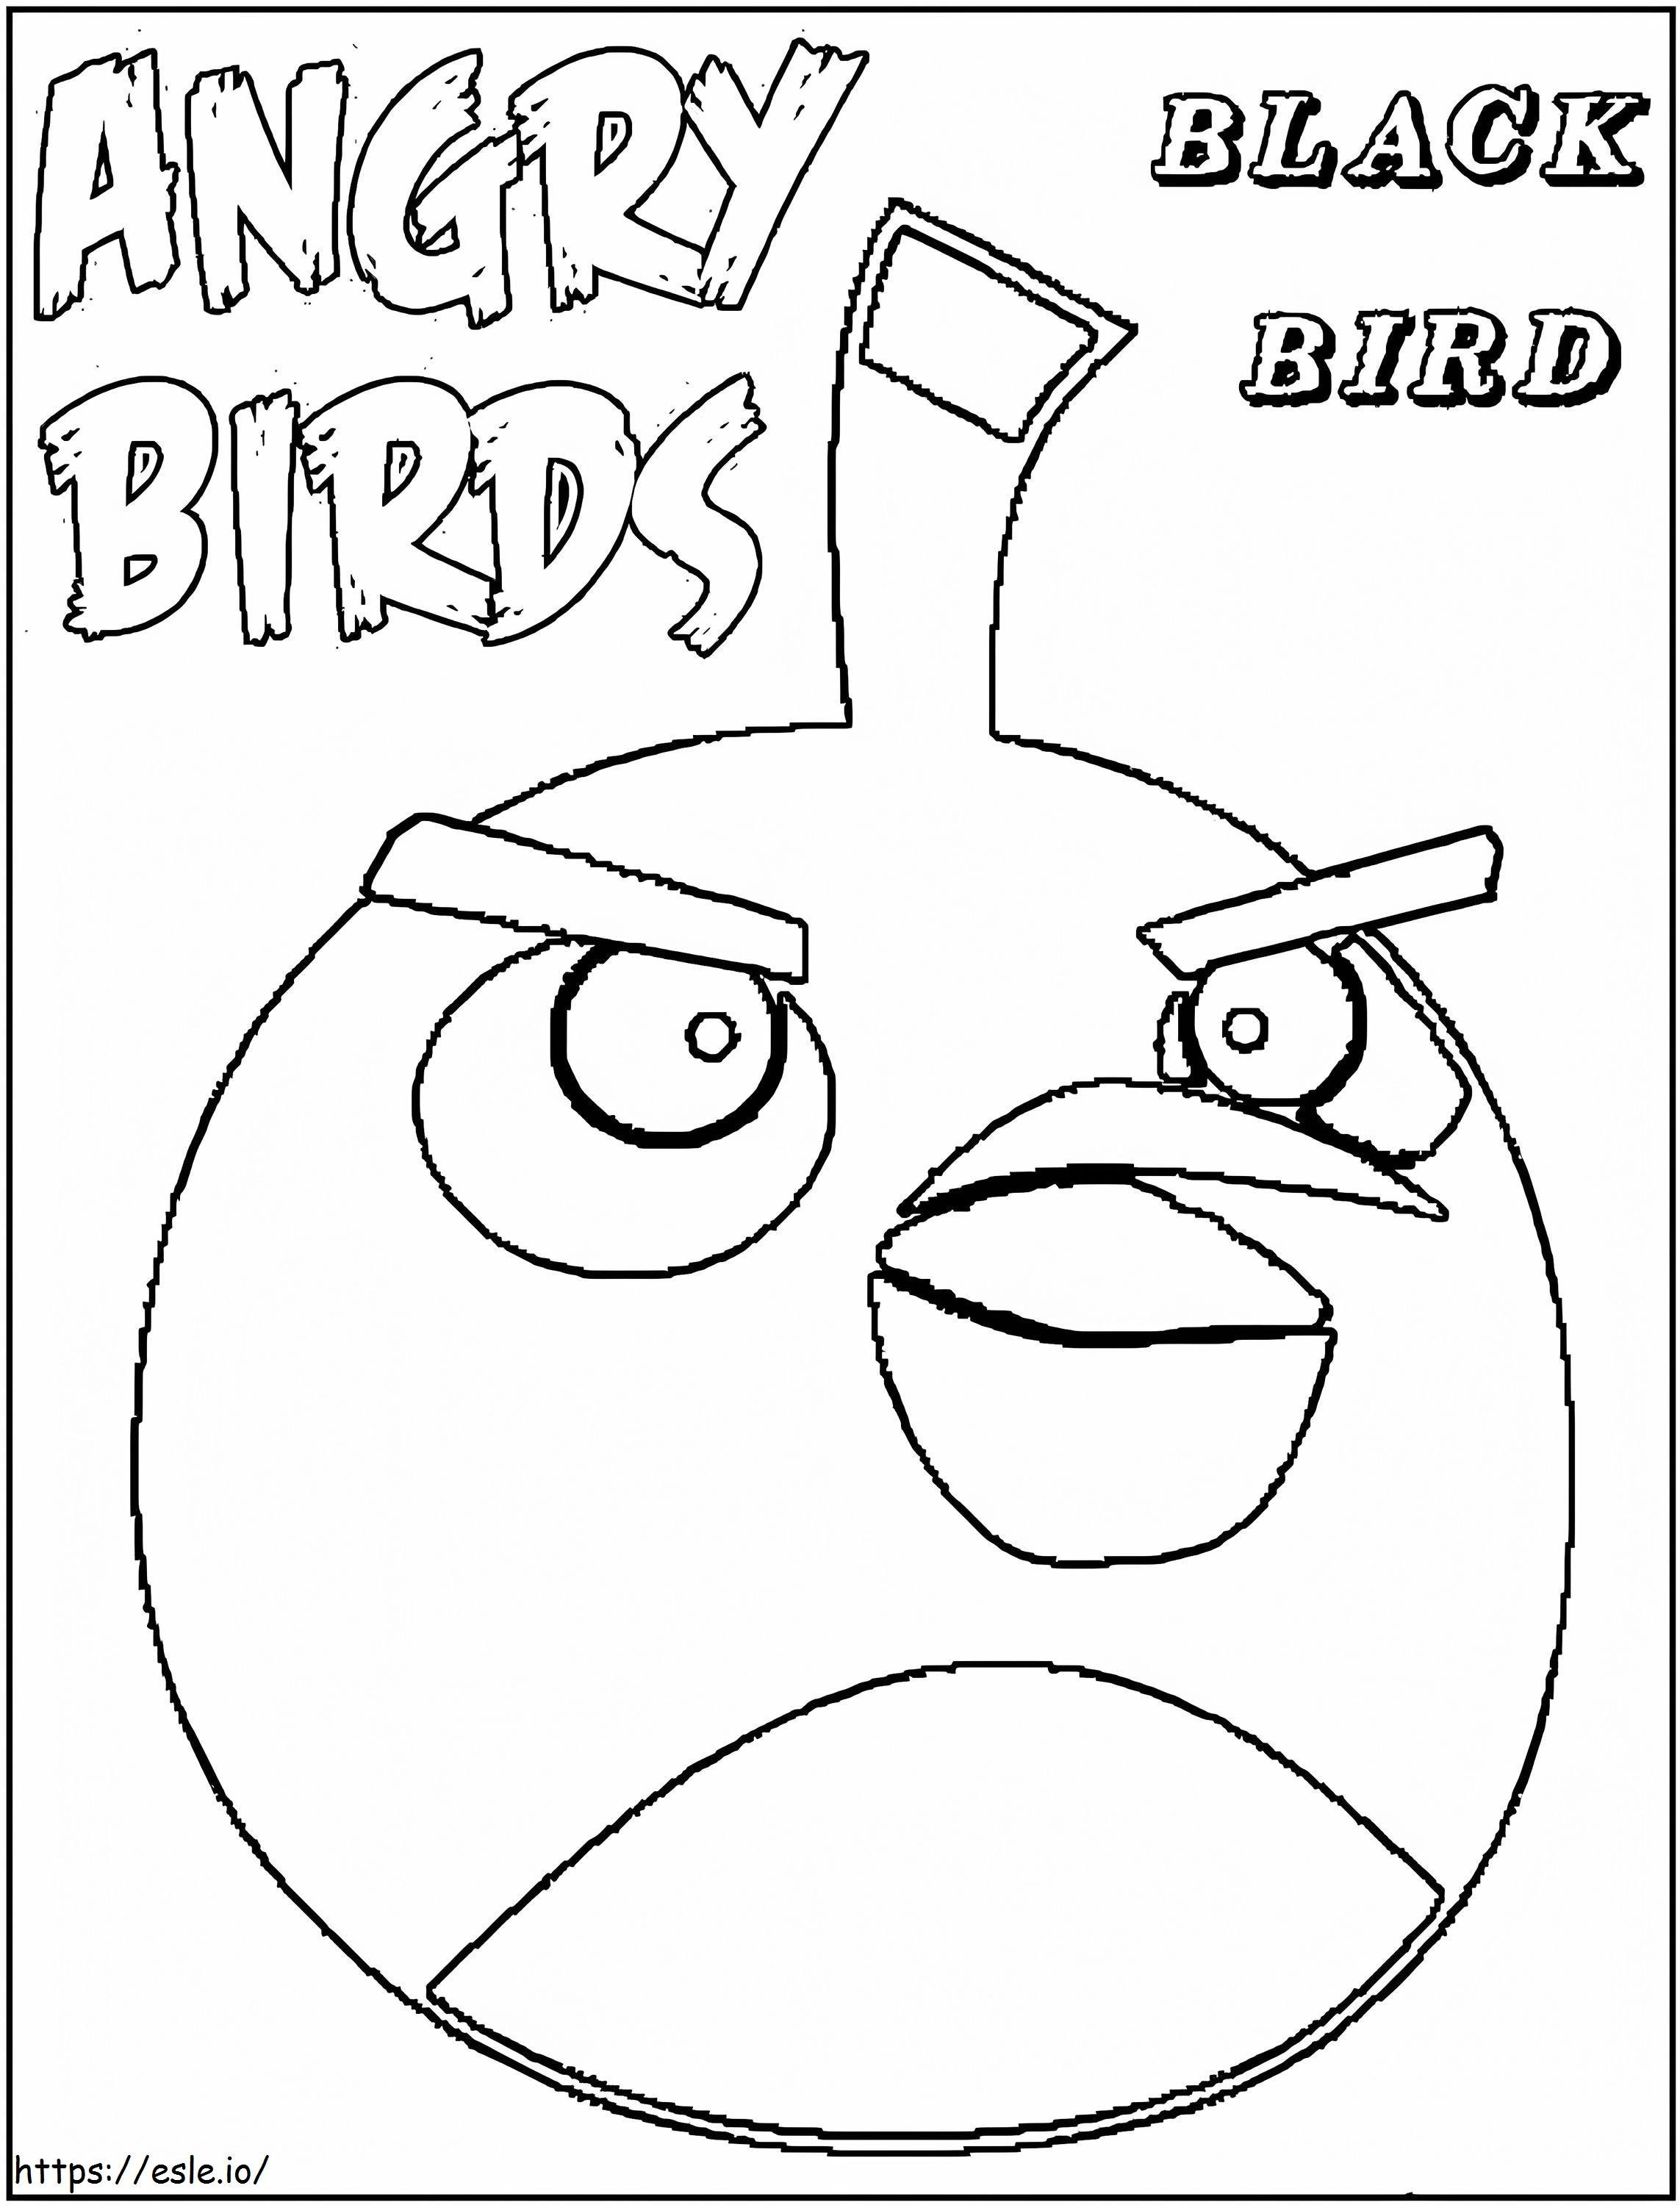 Czarny ptak rysunek od Angry Birds kolorowanka